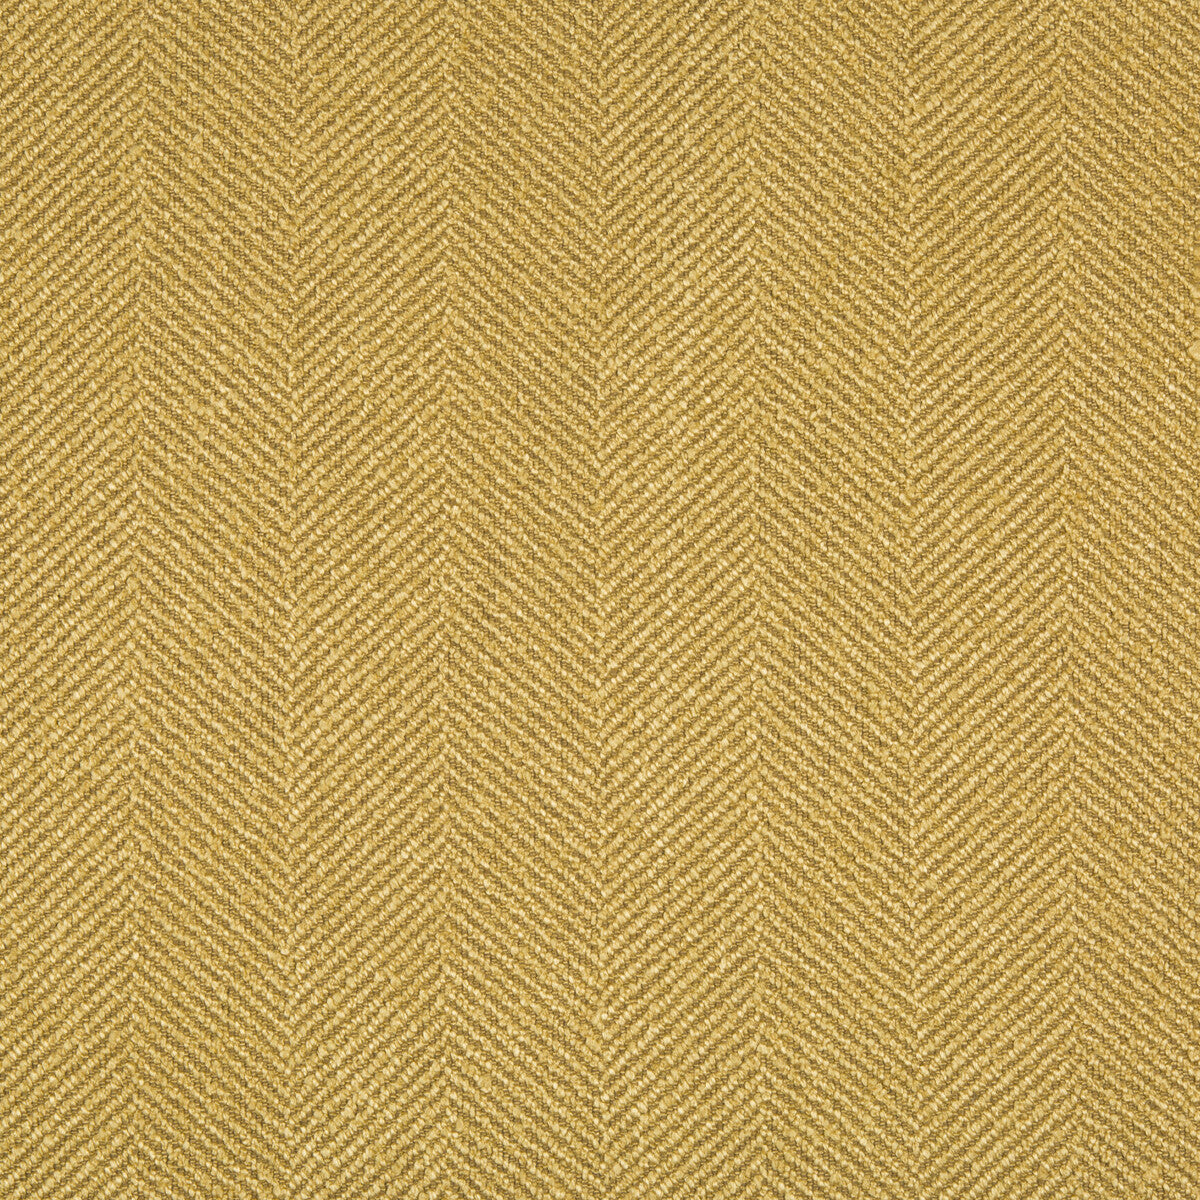 Kravet Smart fabric in 34631-416 color - pattern 34631.416.0 - by Kravet Smart